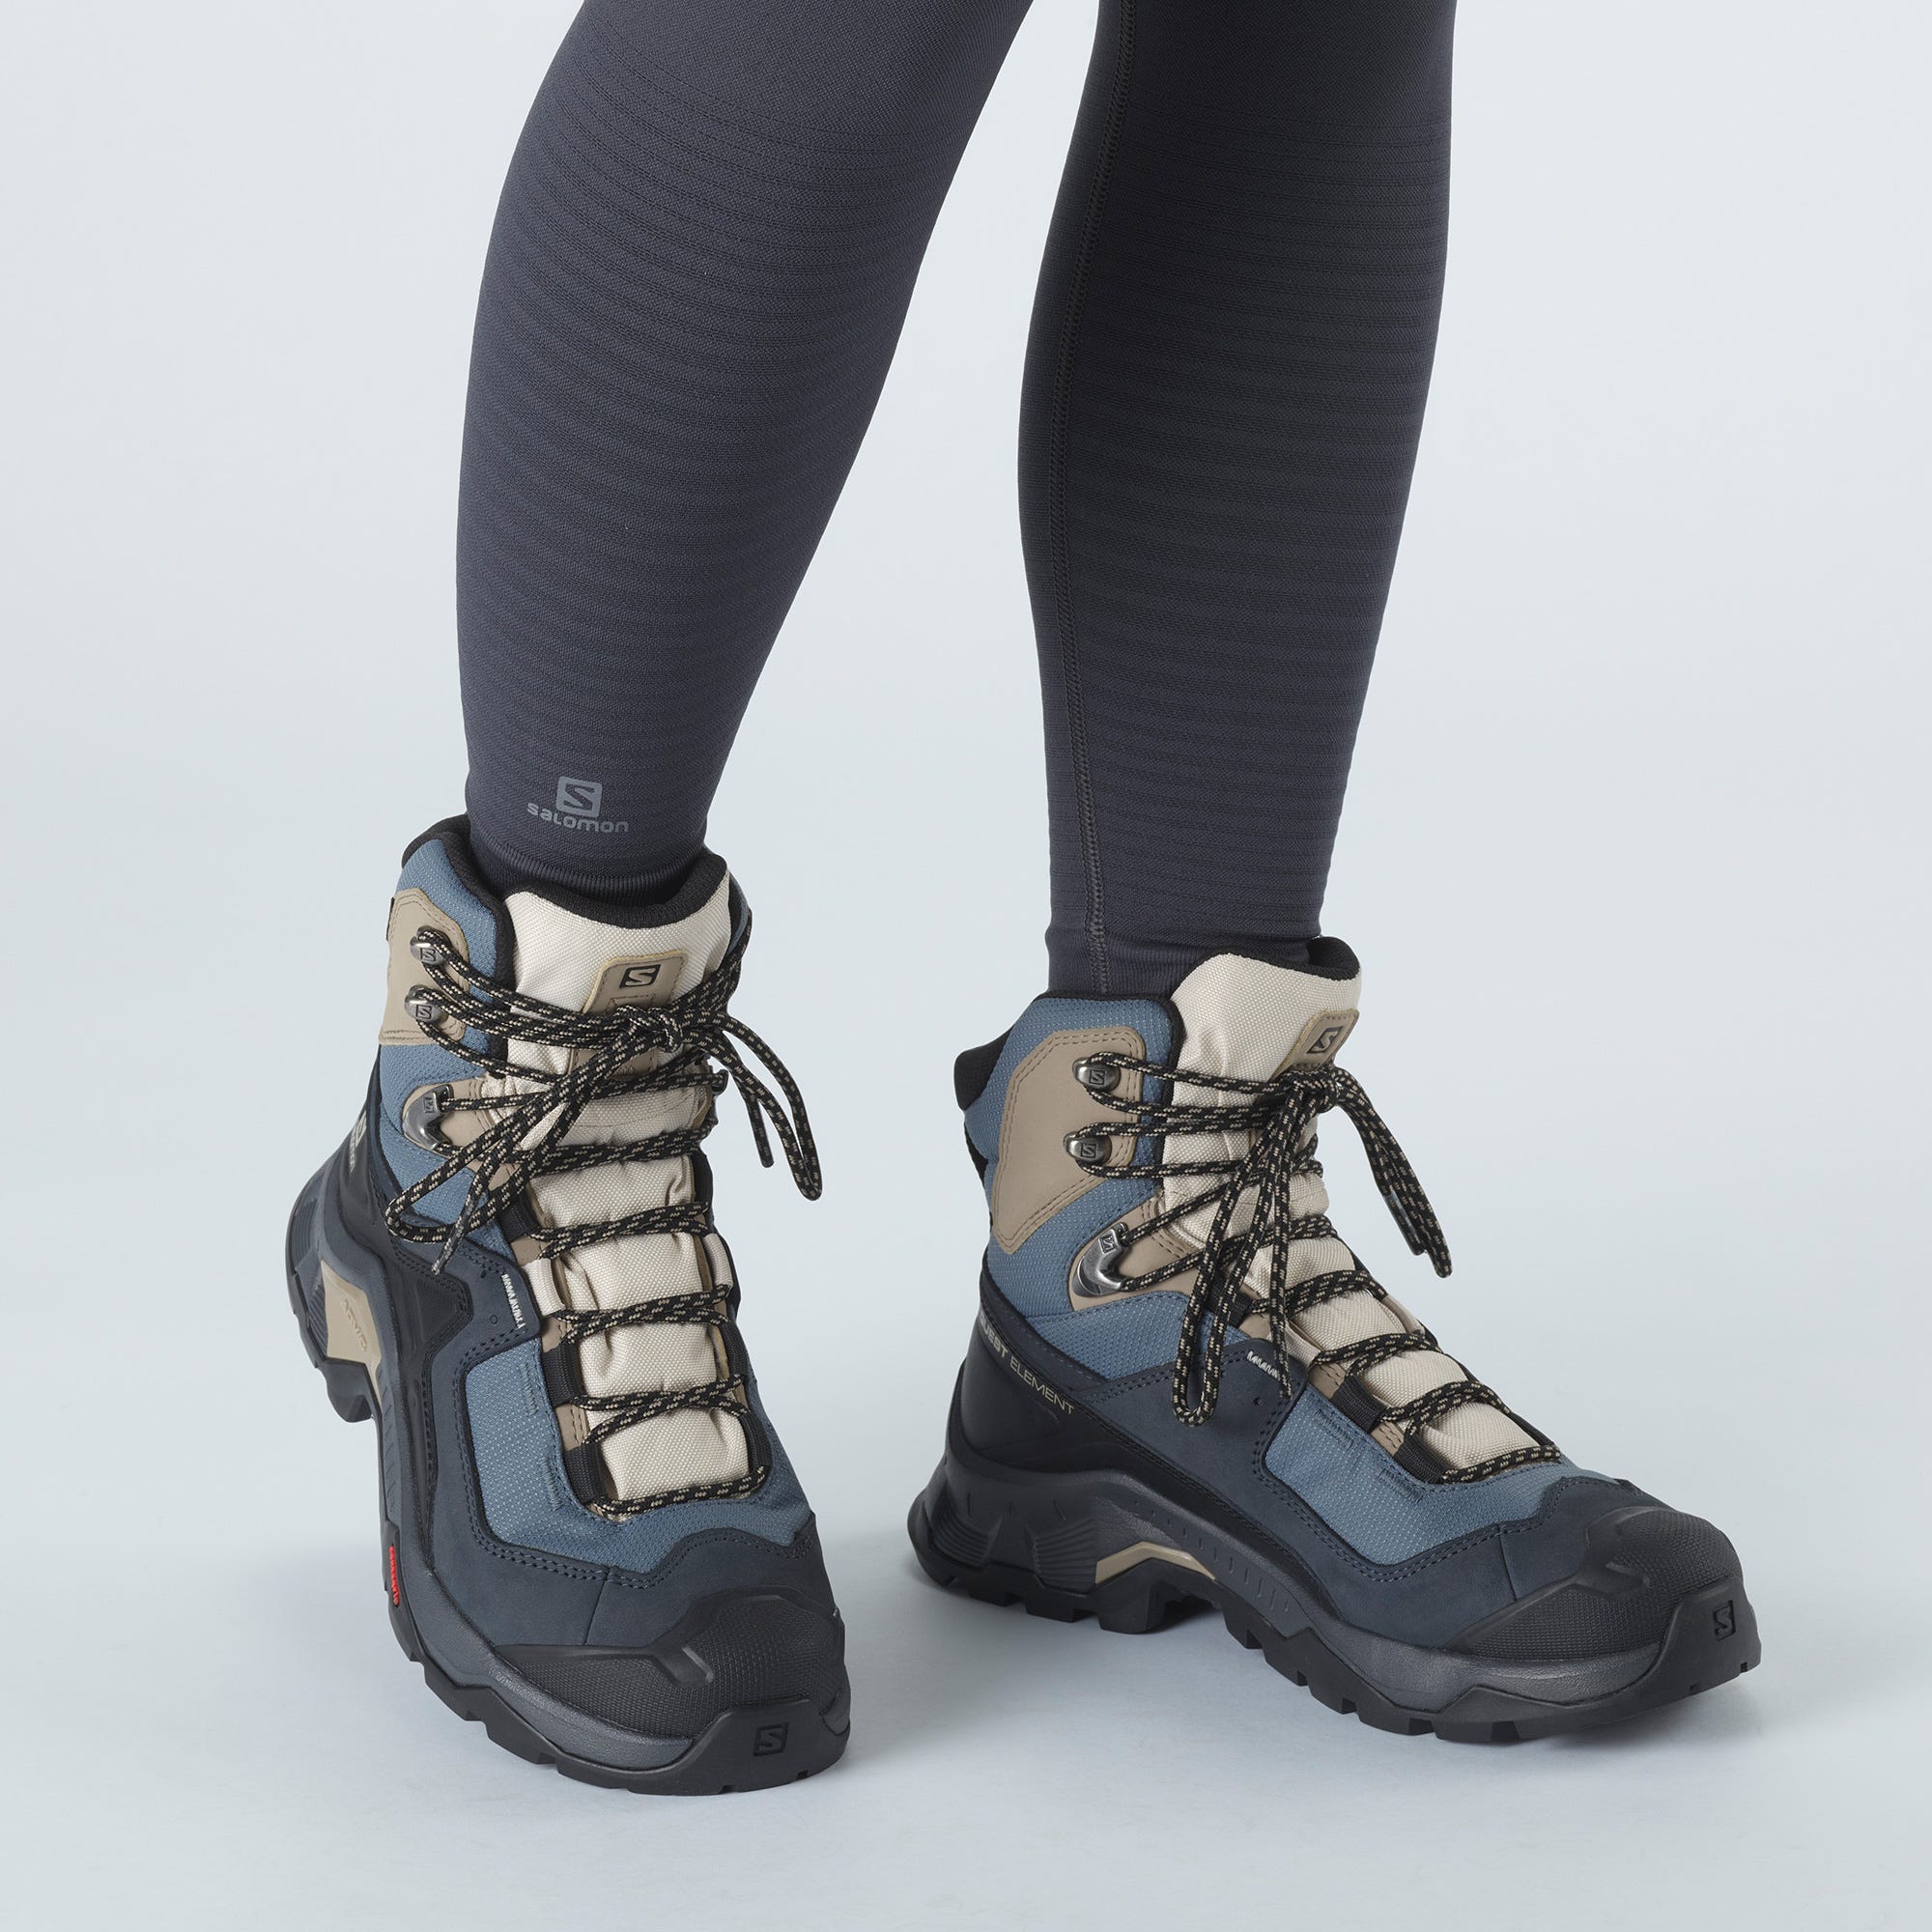 Salomon Quest Element GTX Hiking Boot (Women's) - Ebony/Rainy Day/Stormy Weather - Find Your Feet Australia Hobart Launceston Tasmania